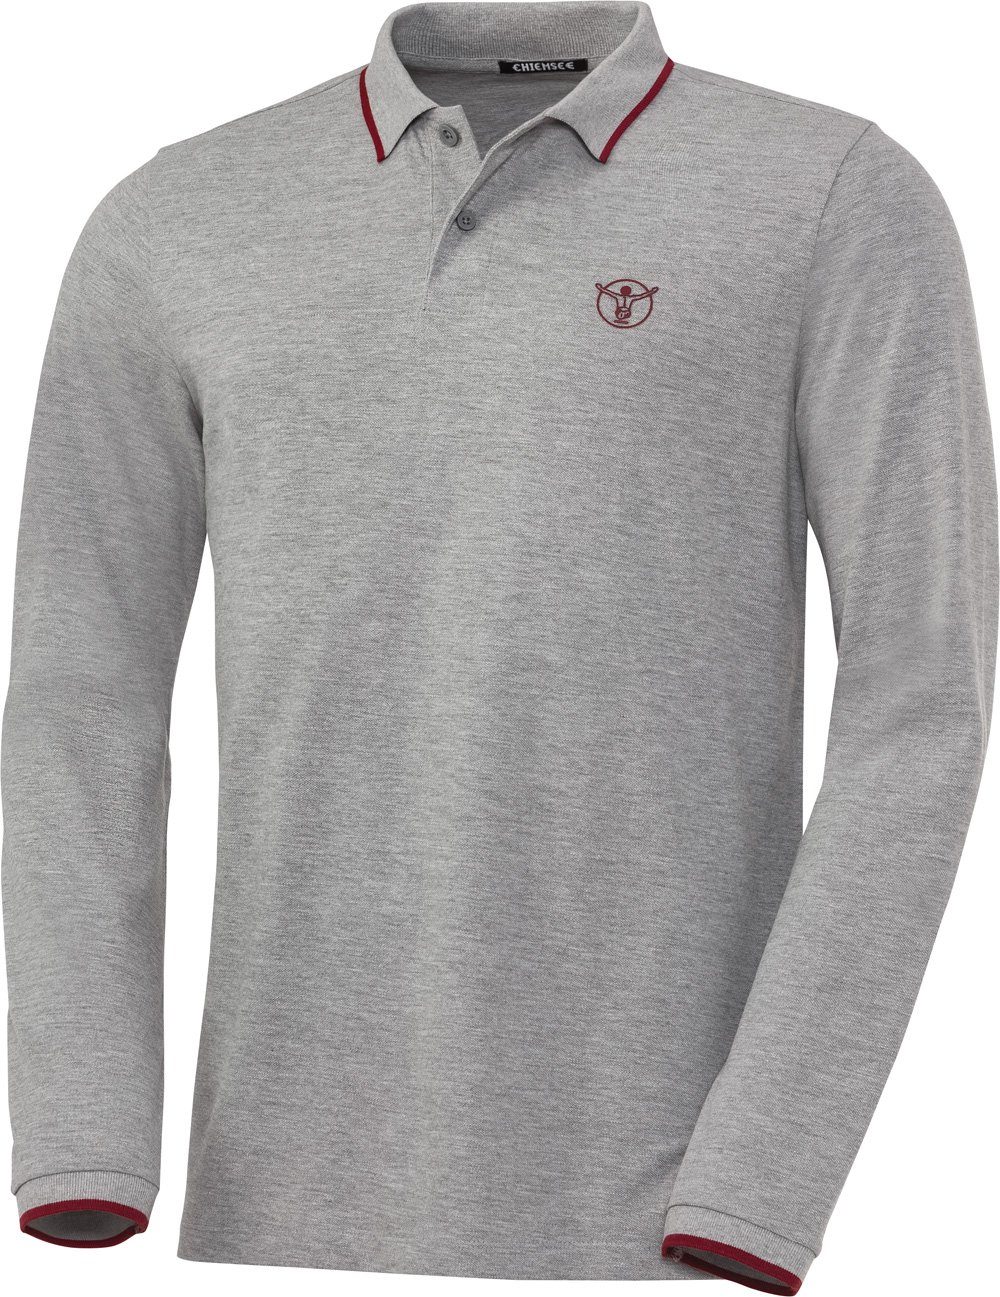 Chiemsee Langarm-Poloshirt aus formstabilem Baumwoll-Piqué grau